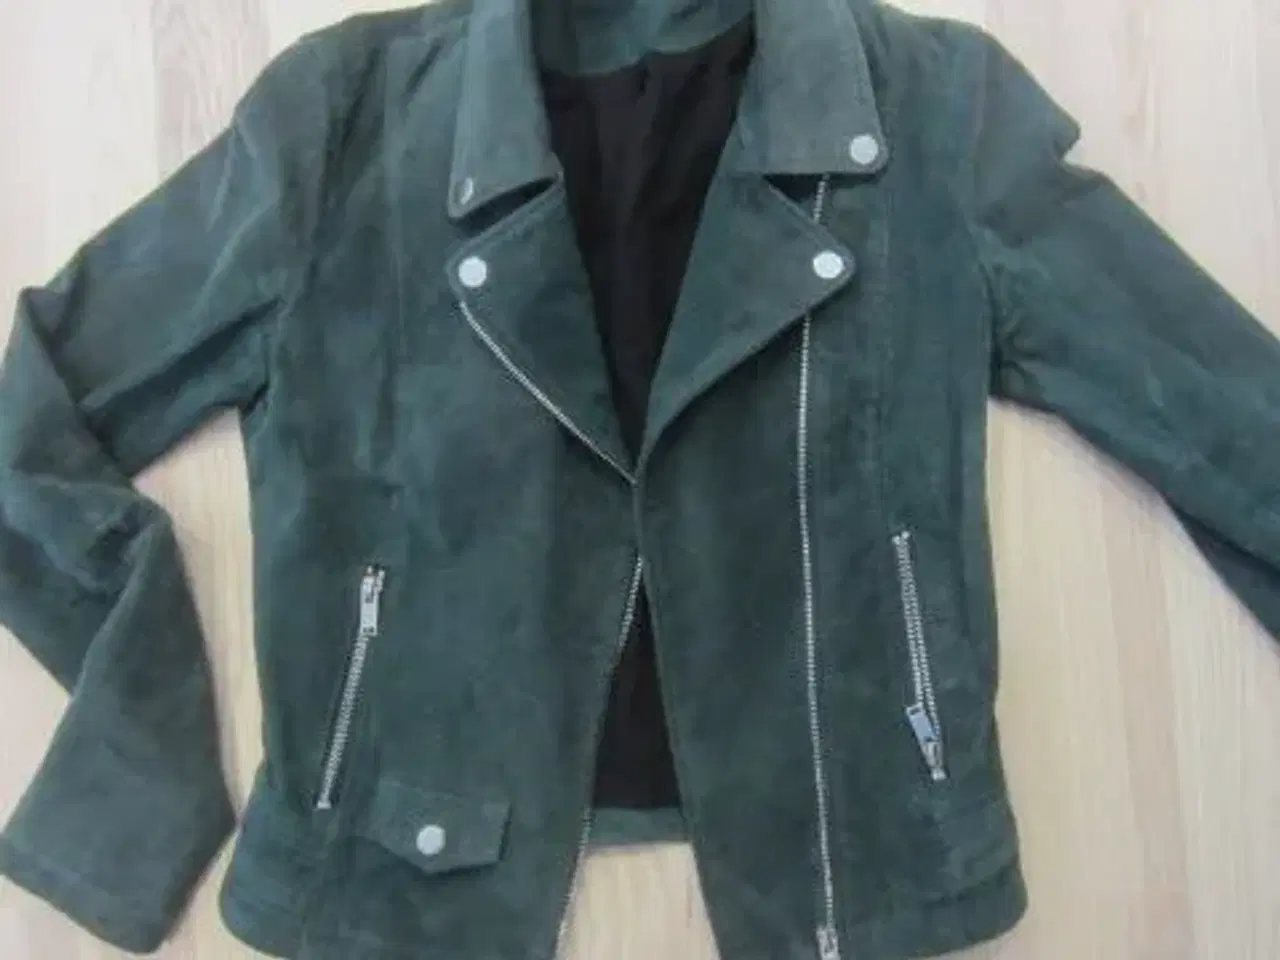 Billede 3 - Str. S, mørkegrøn jakke fra ZARA